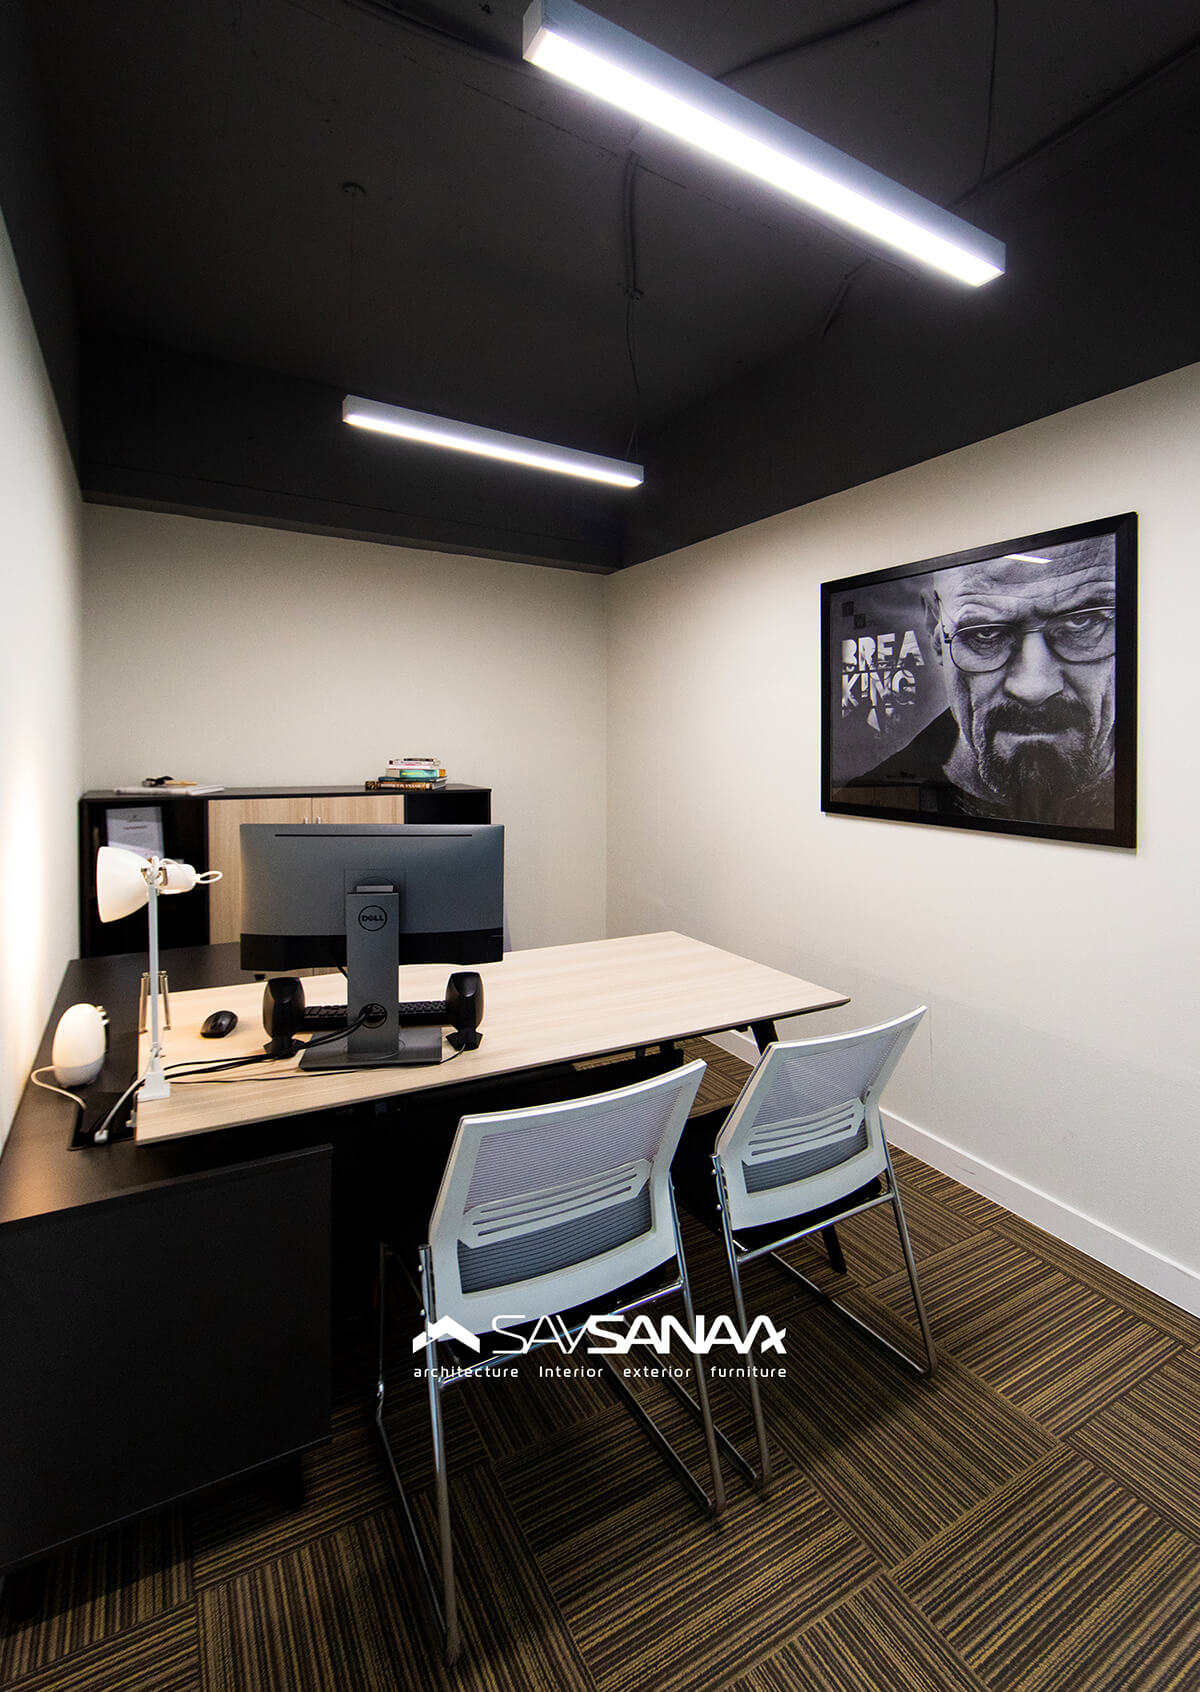 saysanaa new office (22)